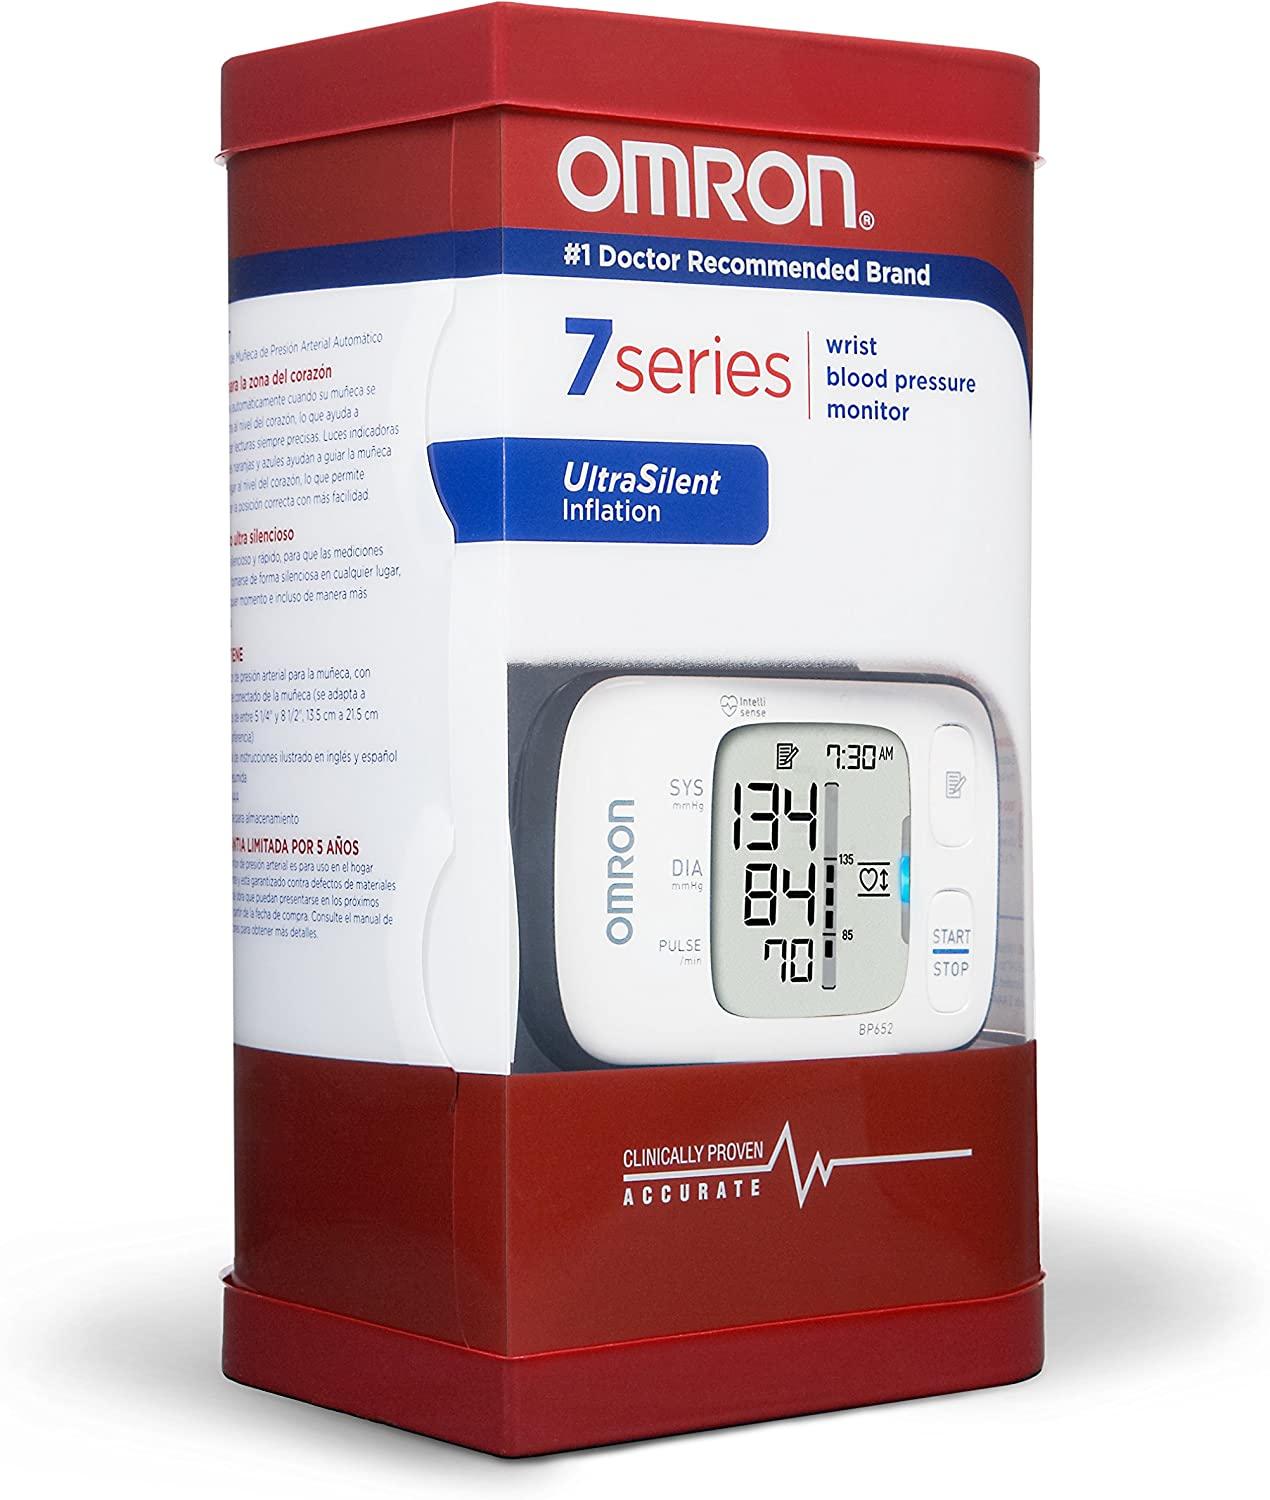 Omron 3 Series Wrist Blood Pressure Monitor, White